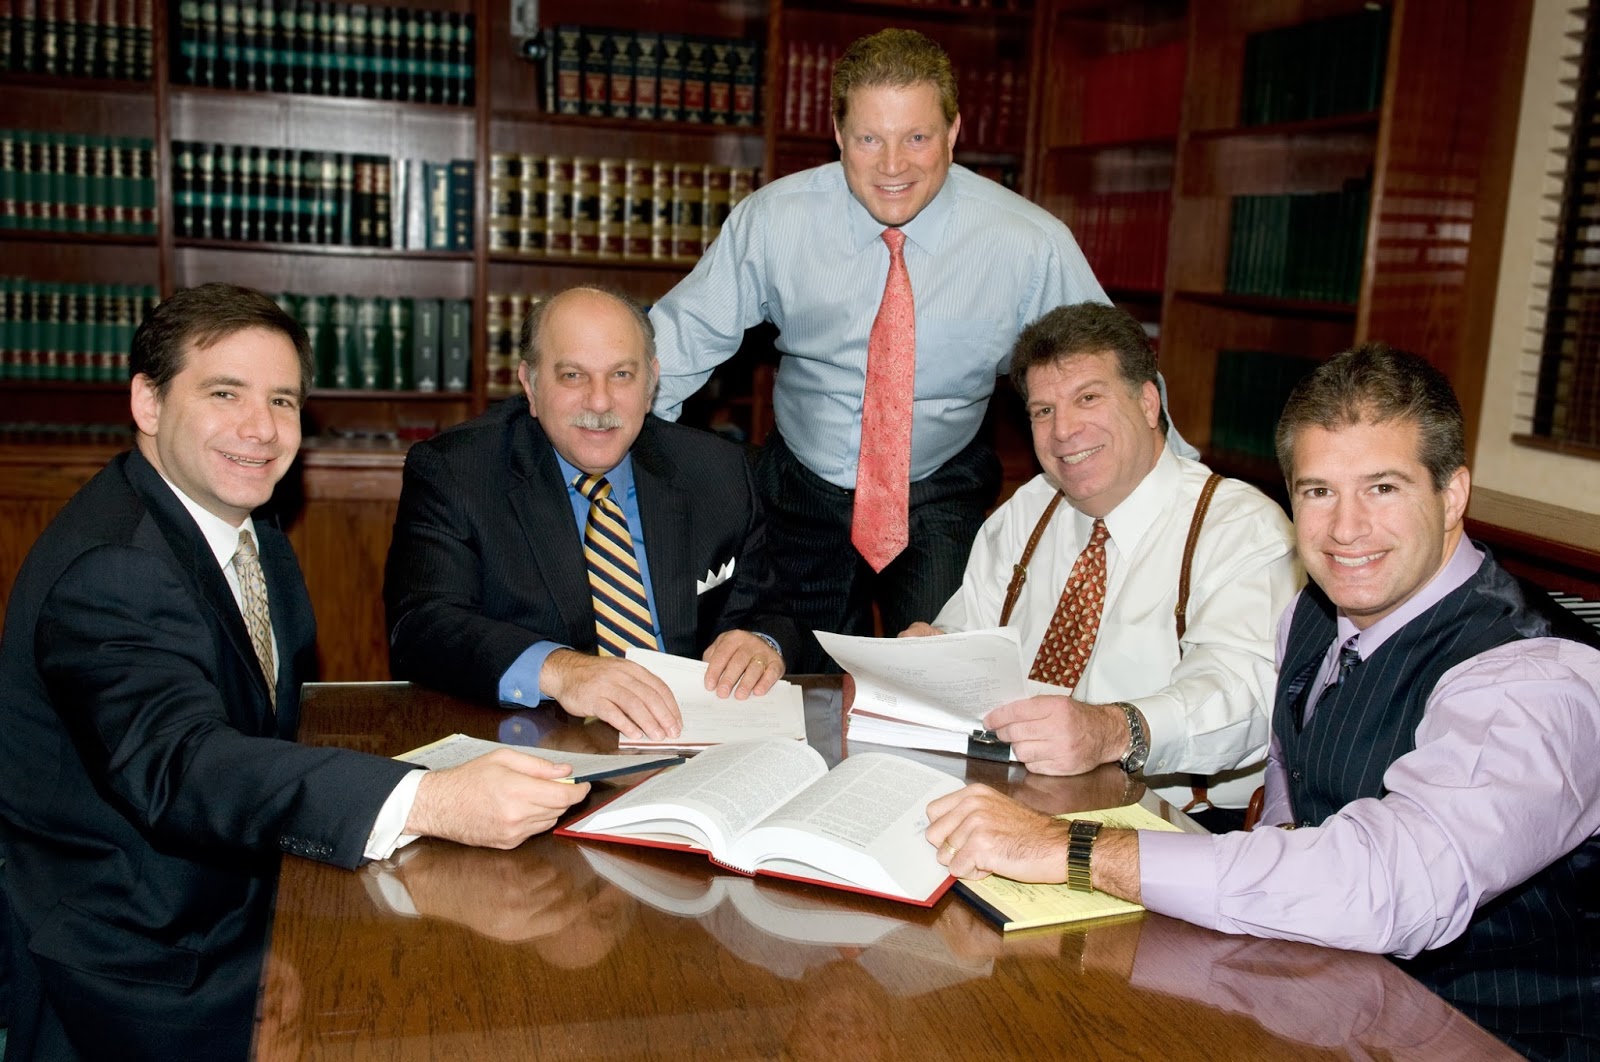 Photo of Davis, Saperstein & Salomon, P.C. in Newark City, New Jersey, United States - 1 Picture of Point of interest, Establishment, Lawyer